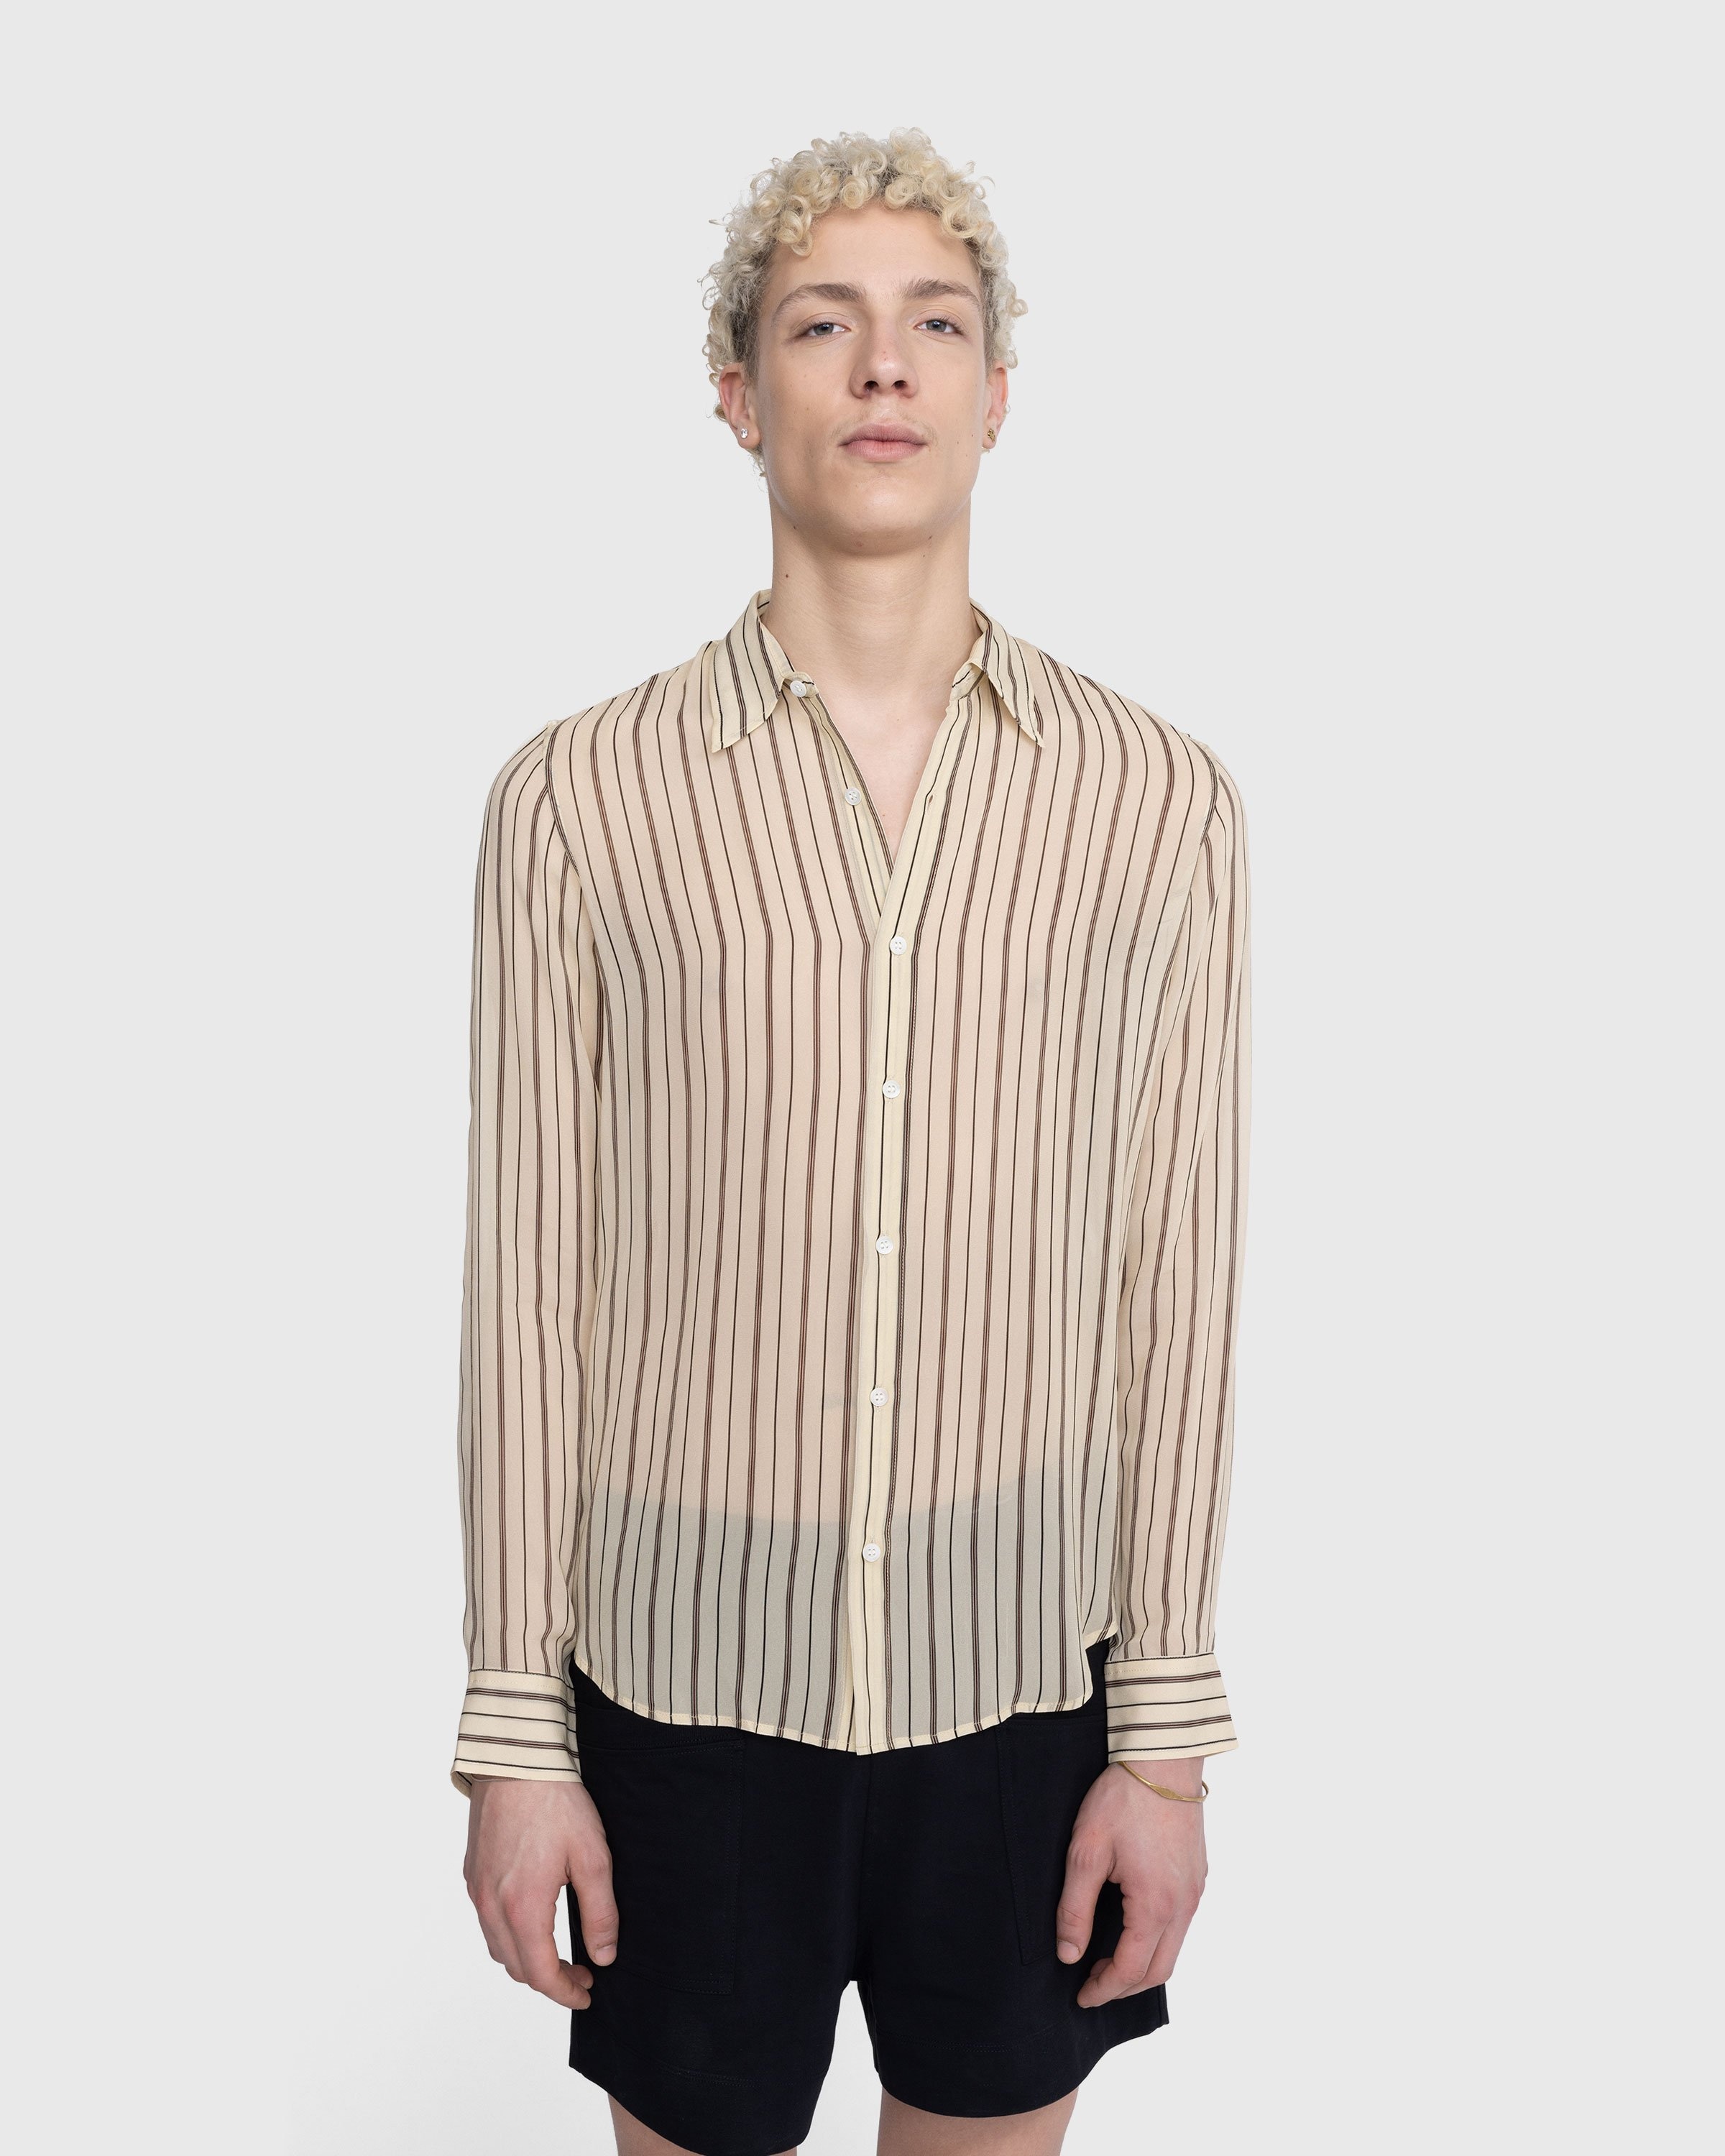 Dries van Noten – Celdon Shirt Ecru - Longsleeve Shirts - Beige - Image 2